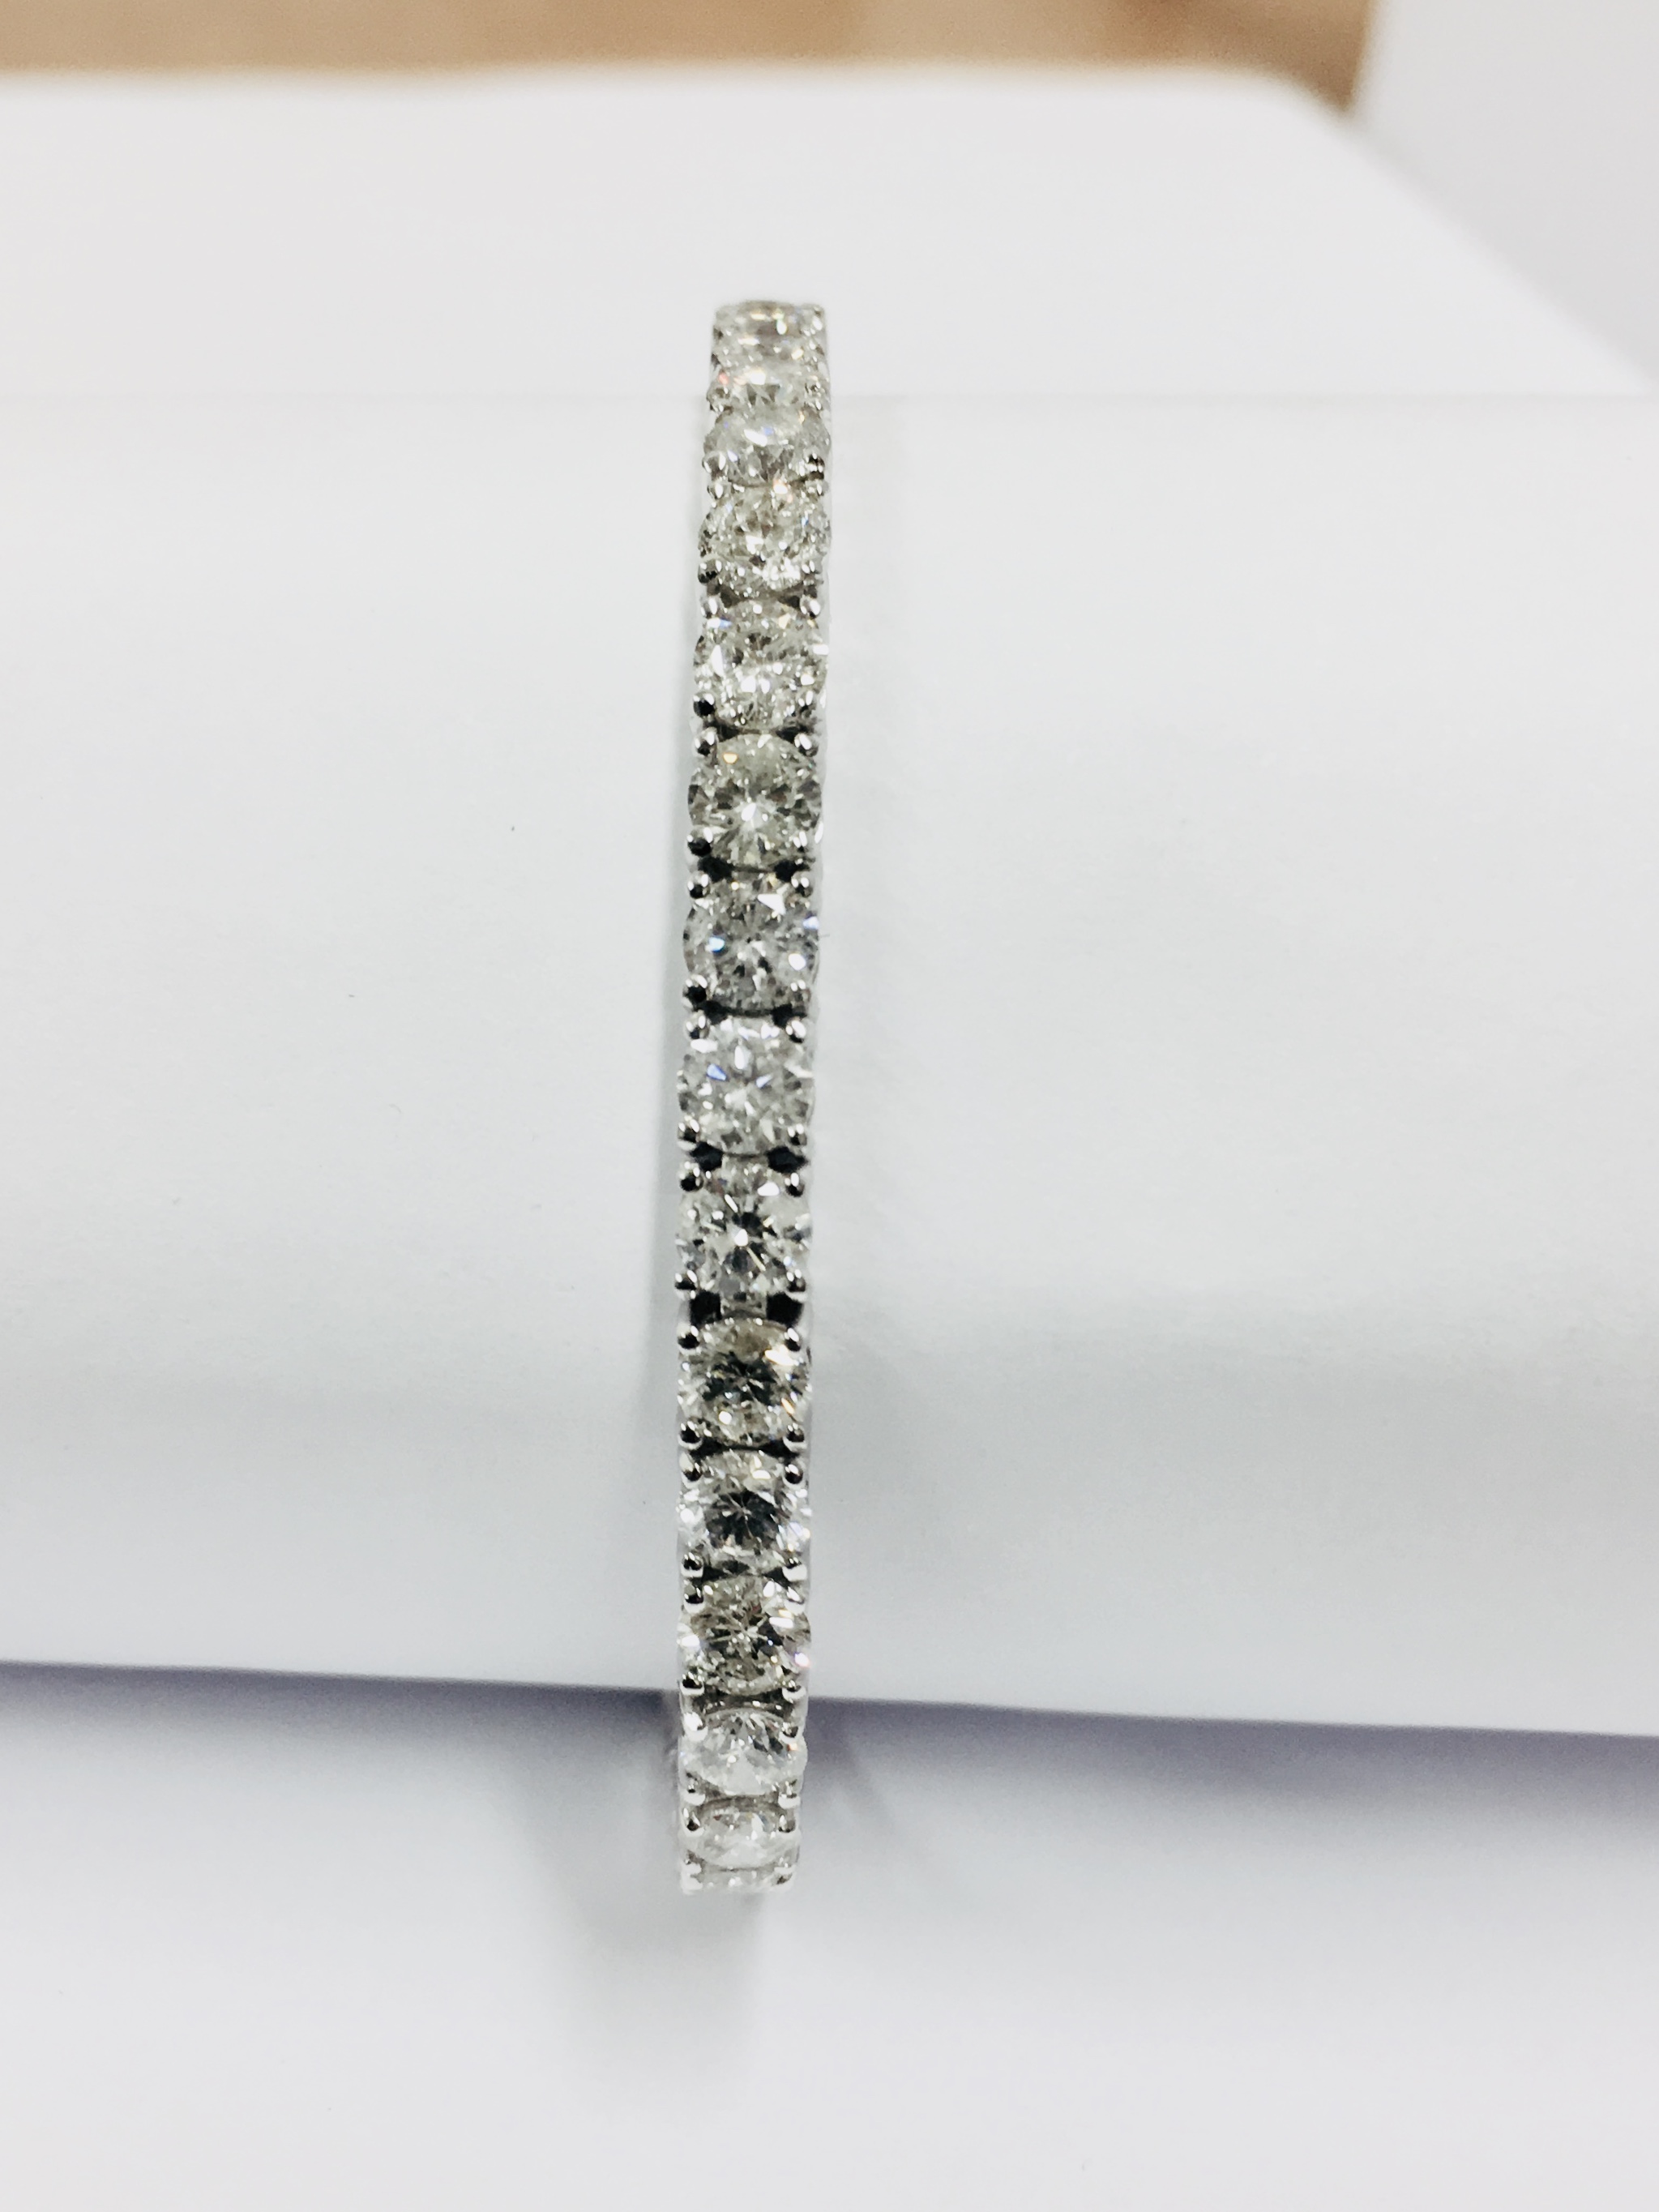 8.00ct Diamond tennis bracelet set with brilliant cut diamonds of G colour - Image 13 of 42